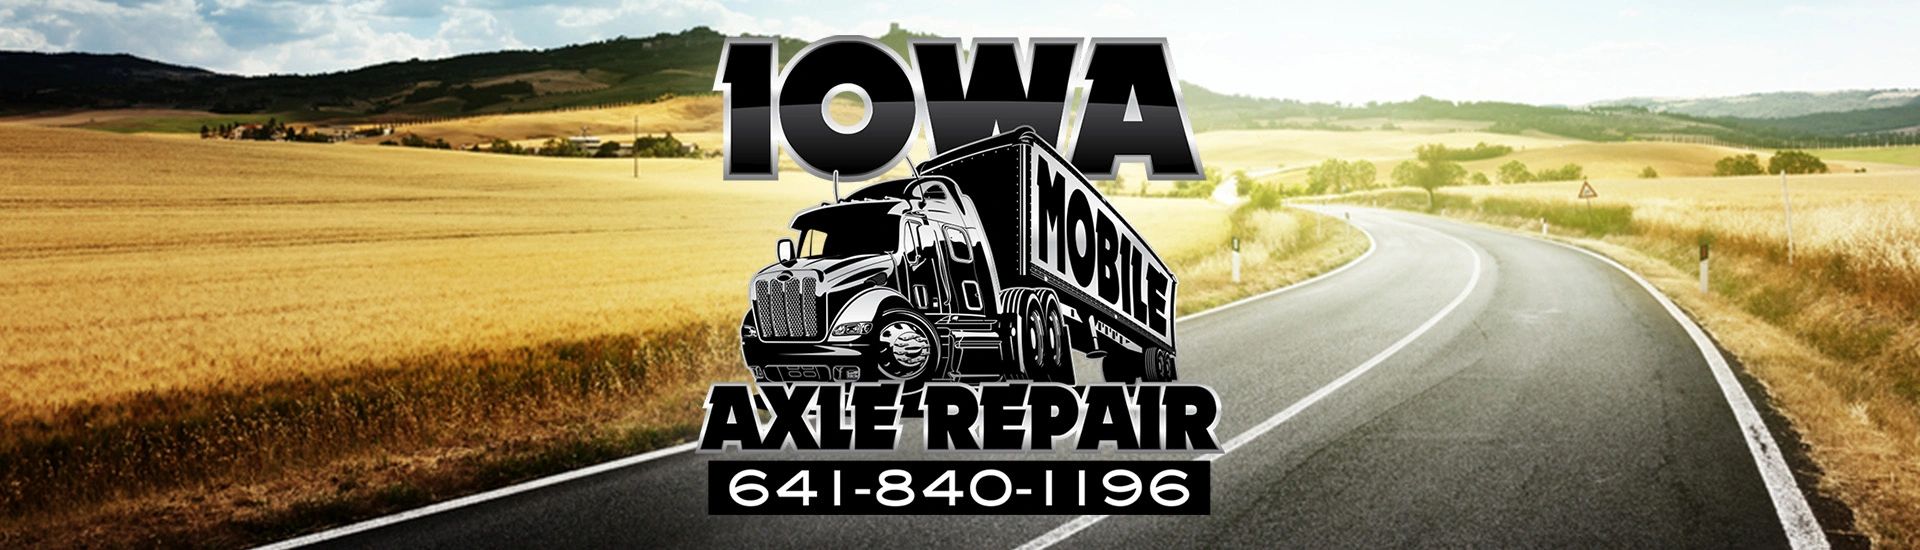 Iowa Mobile Axle Repair